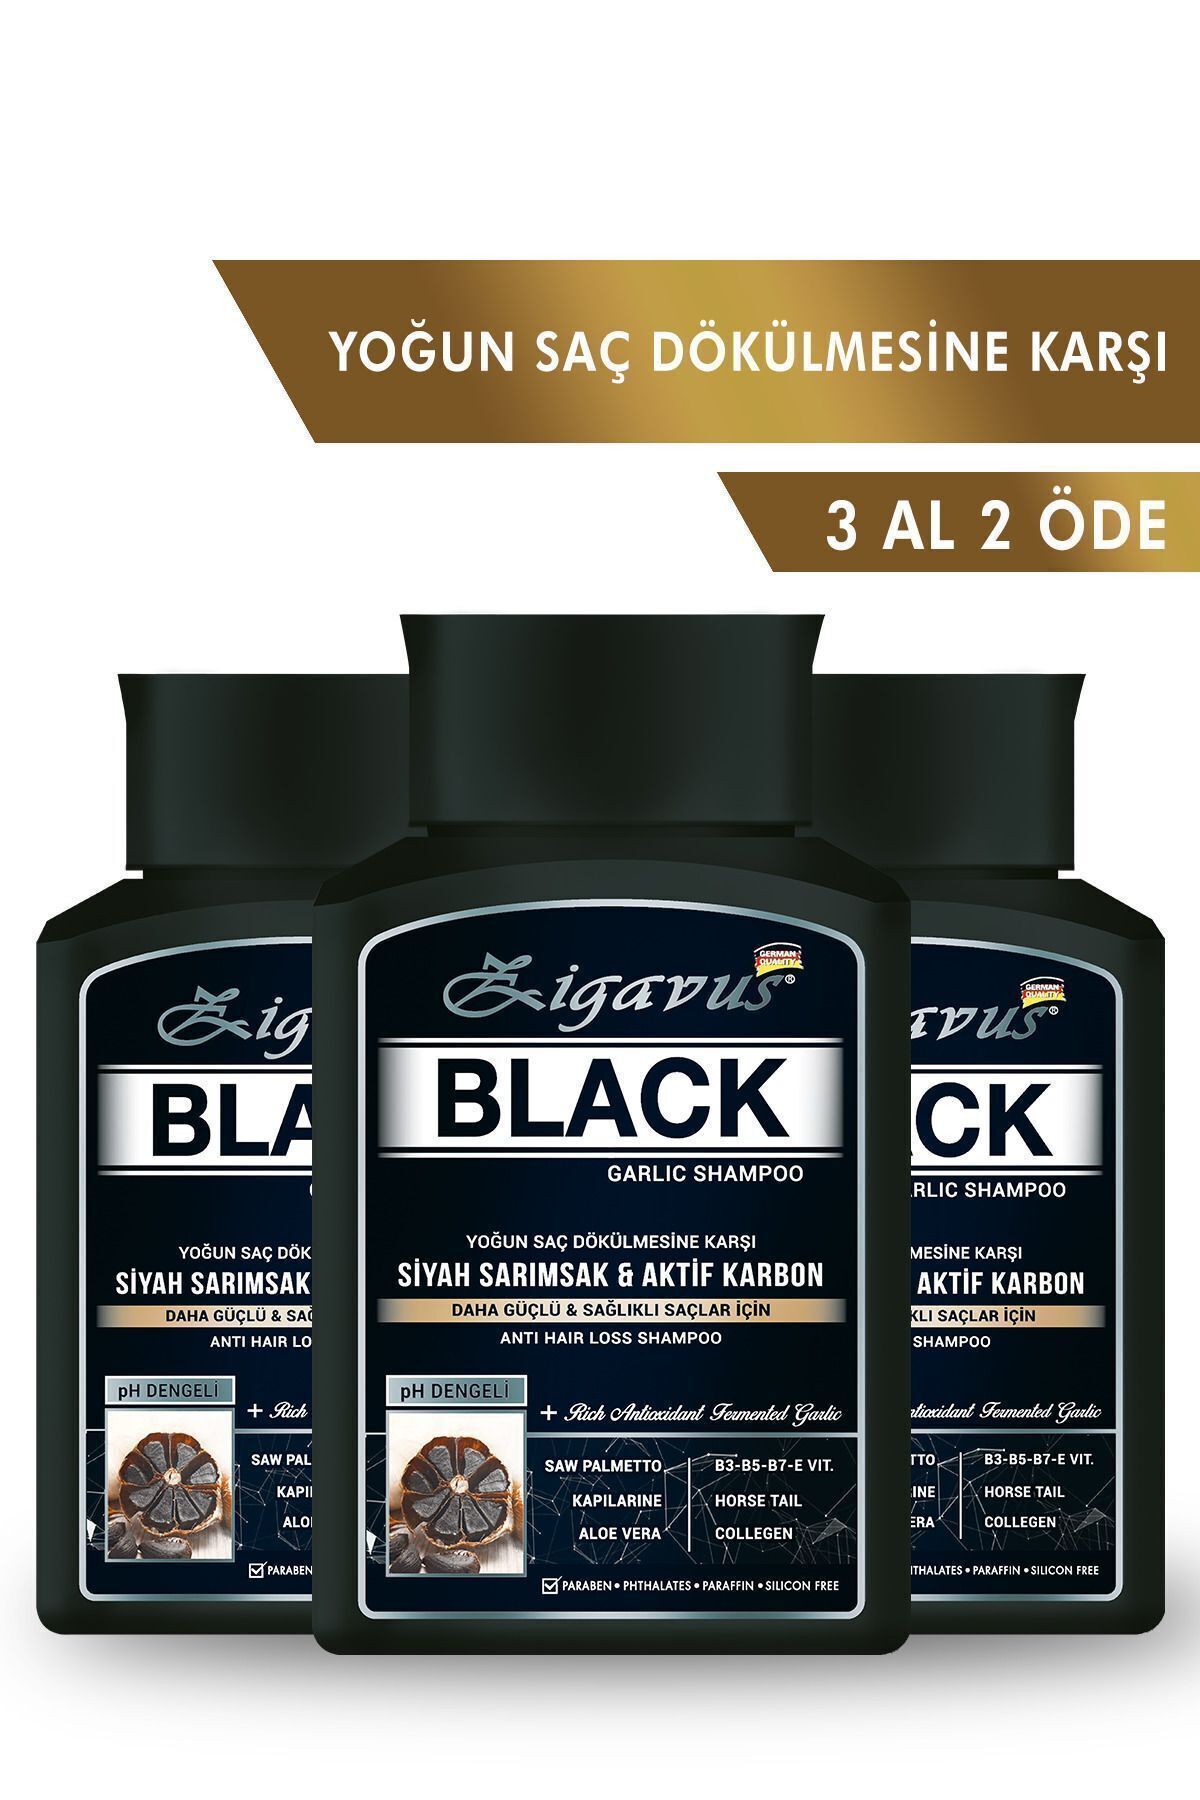 Zigavus Black - Siyah (Kara) Sarımsaklı - Aktif Karbonlu Şampuan 300 ml 3 Al 2 Öde 8699349130763